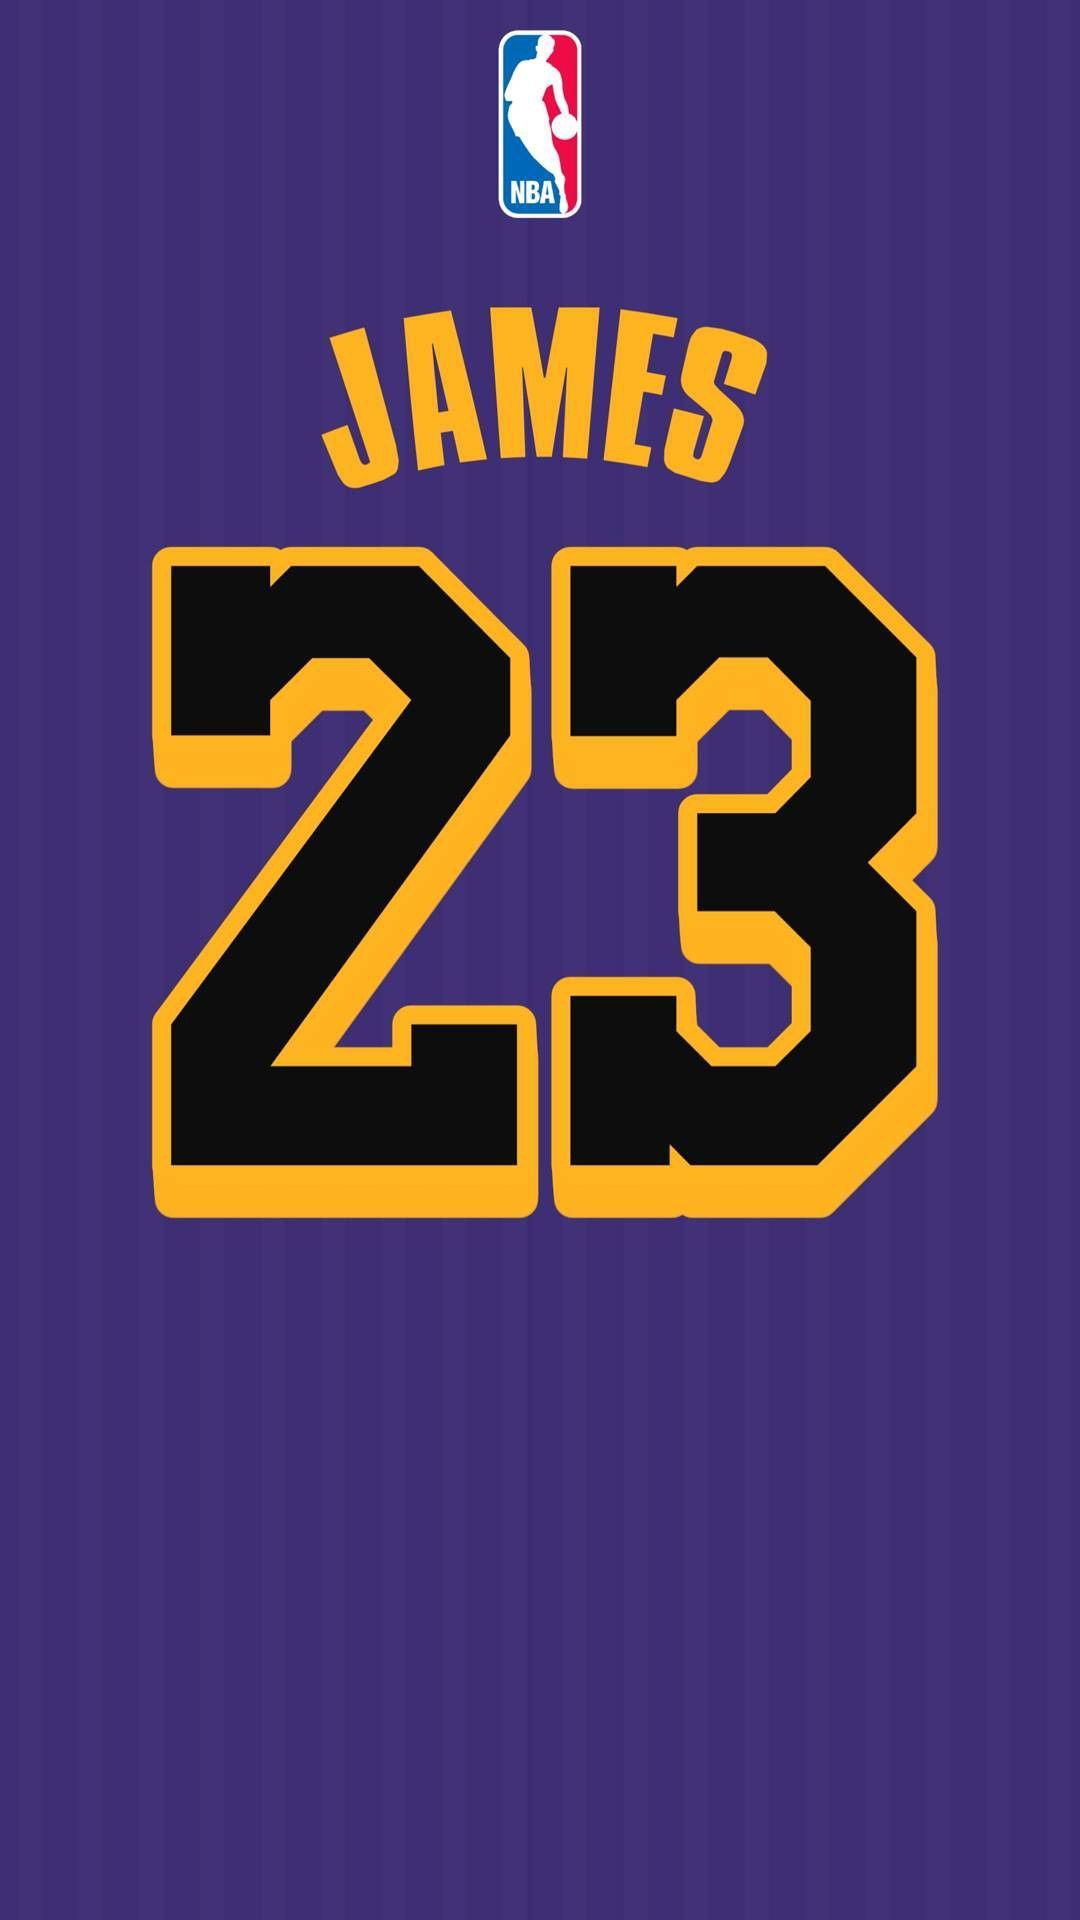 Lakers wallpaper .com